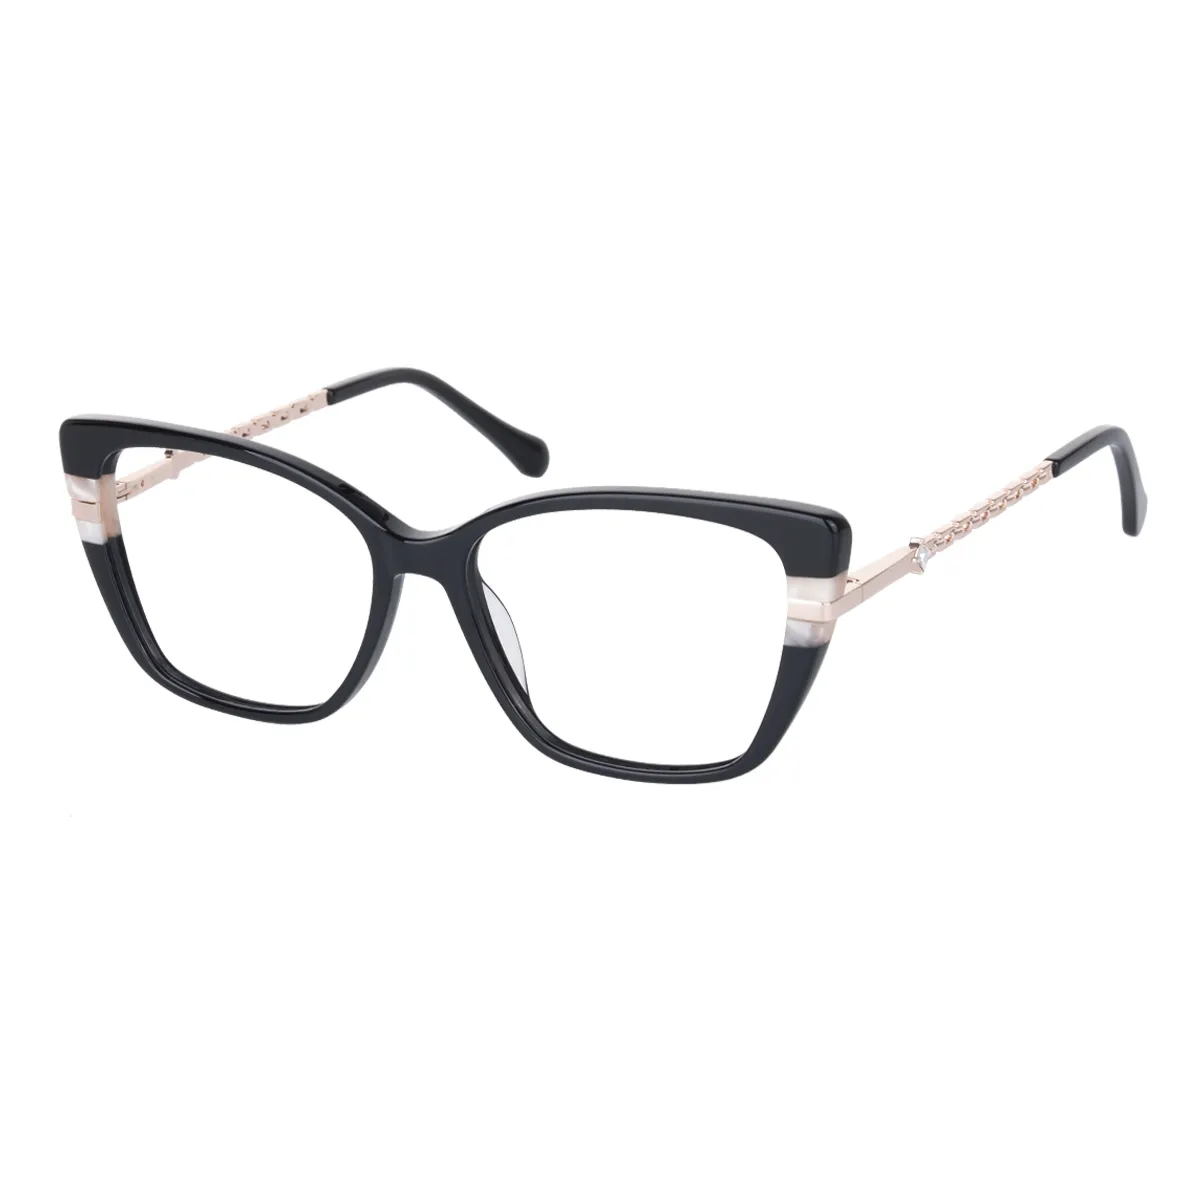 Isabella - Cat-eye Black Glasses for Women - EFE